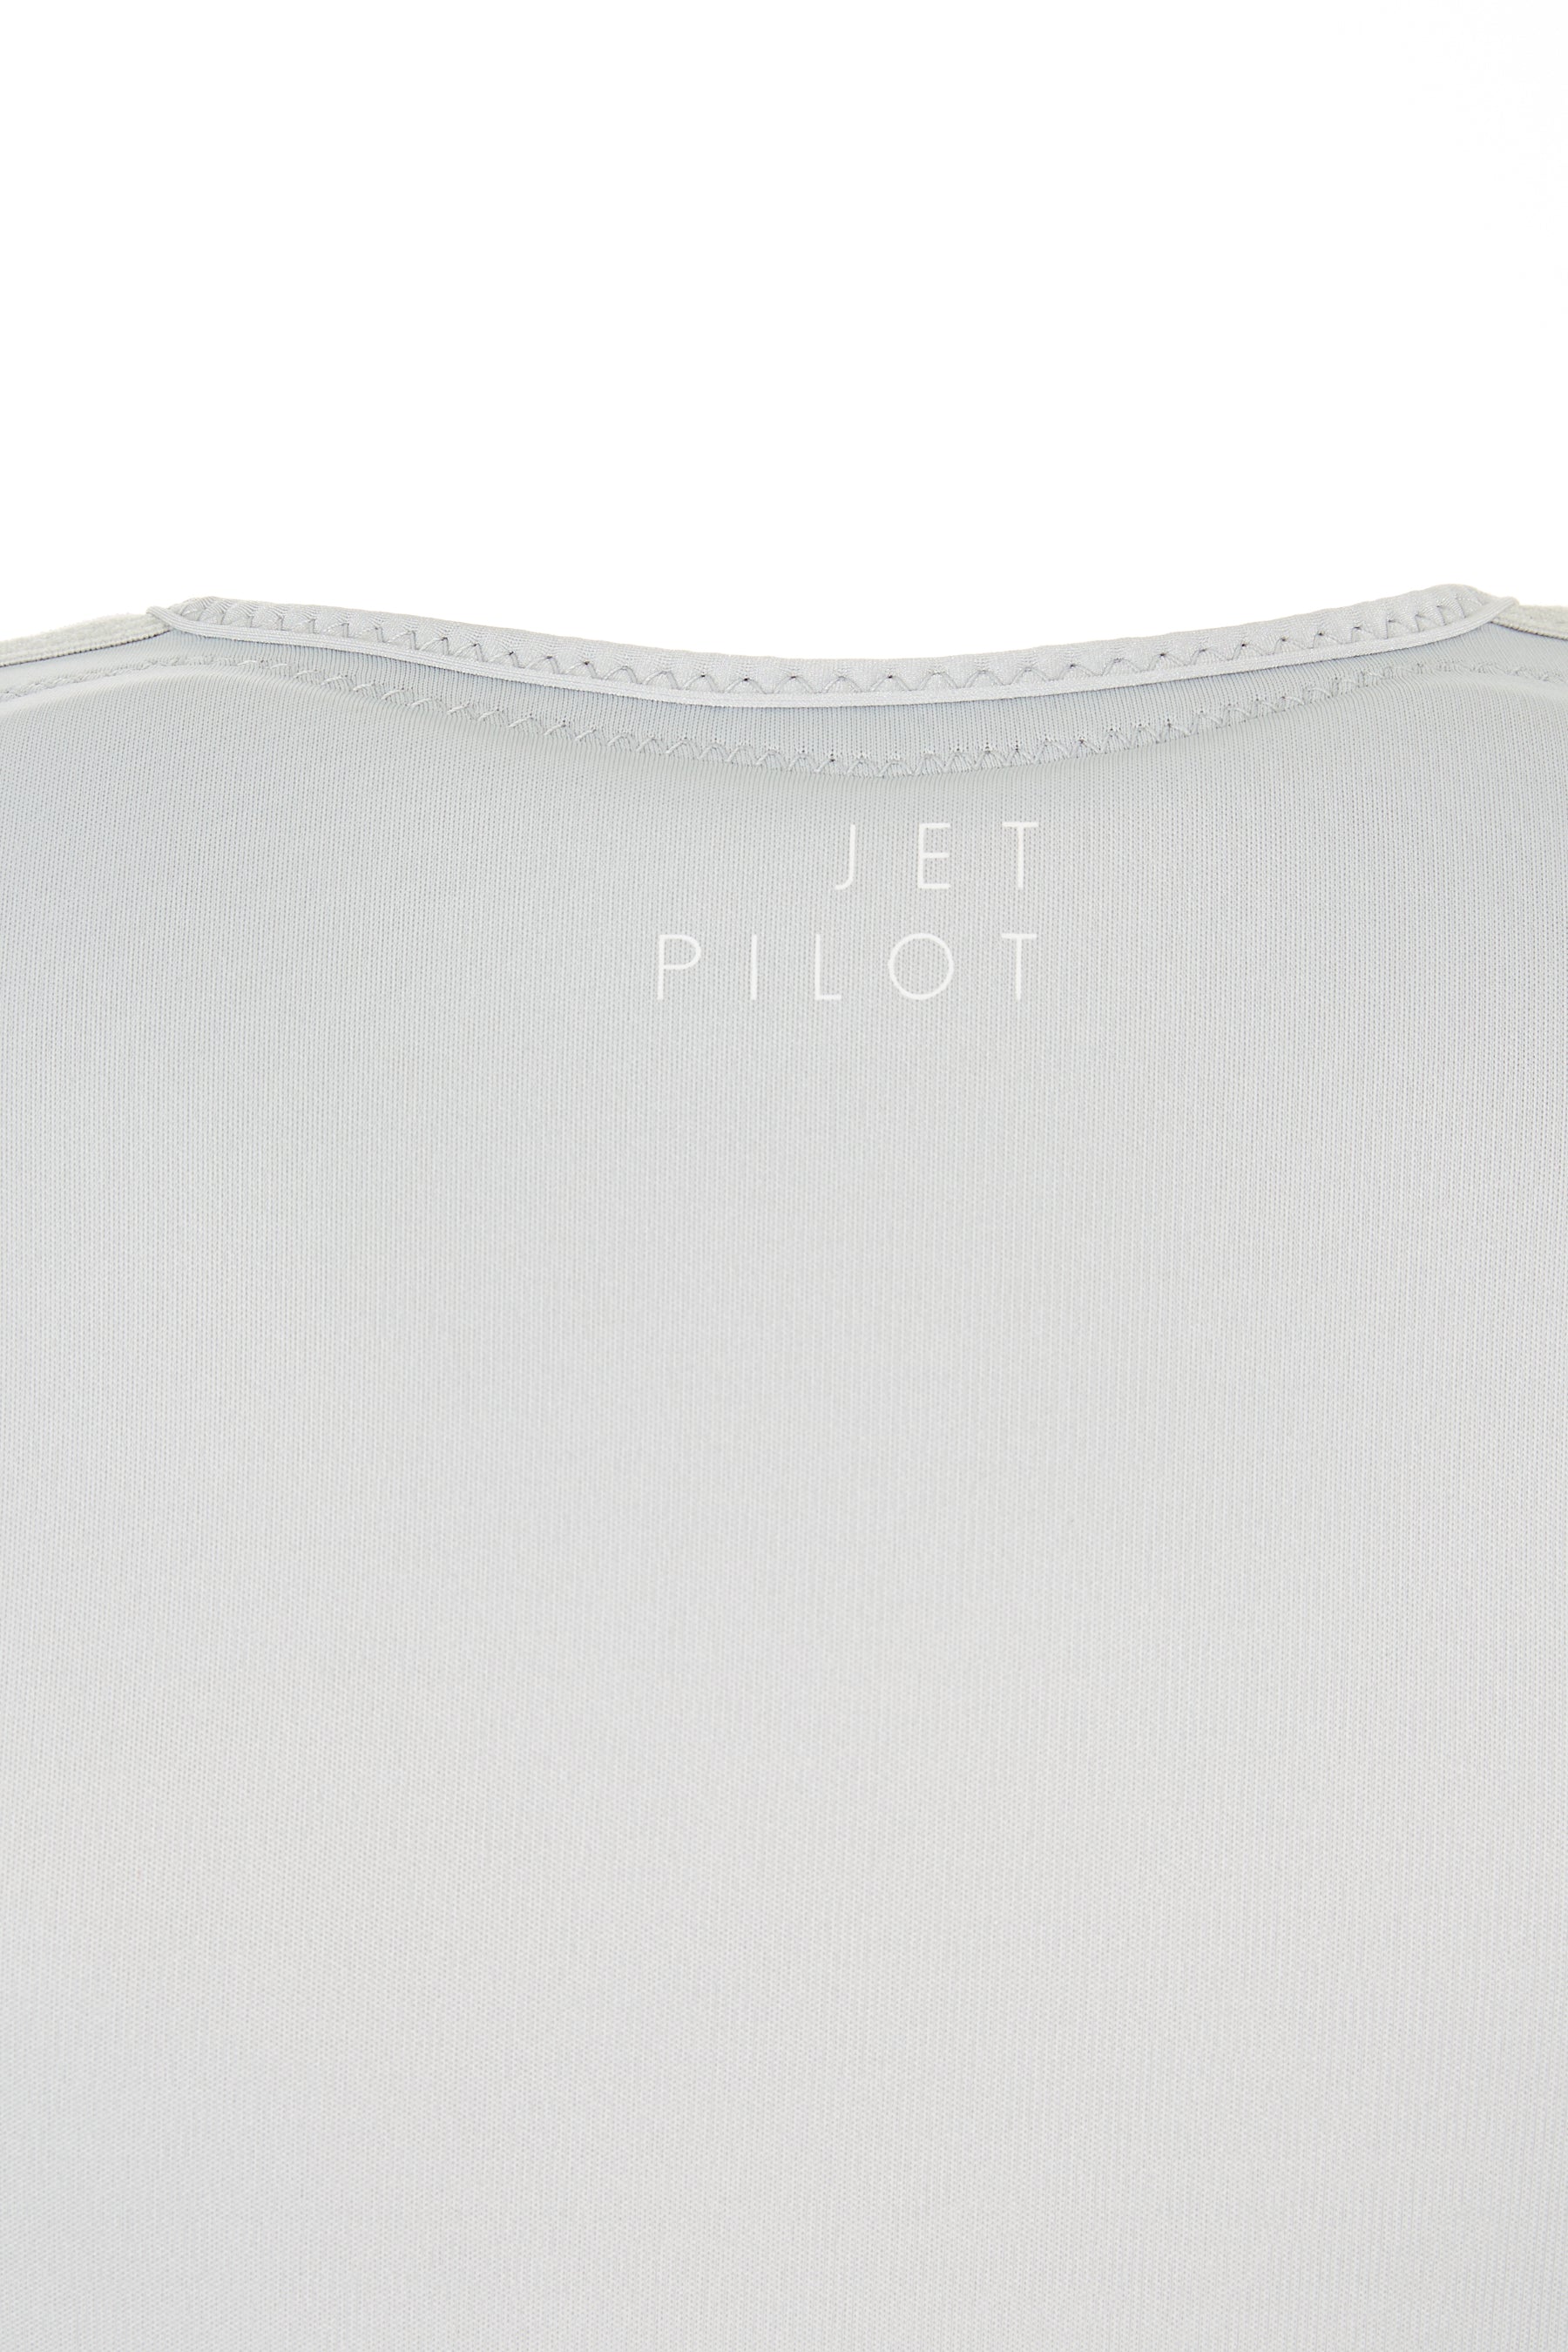 Jetpilot Allure Fe Ladies Neo Vest - Grey 1